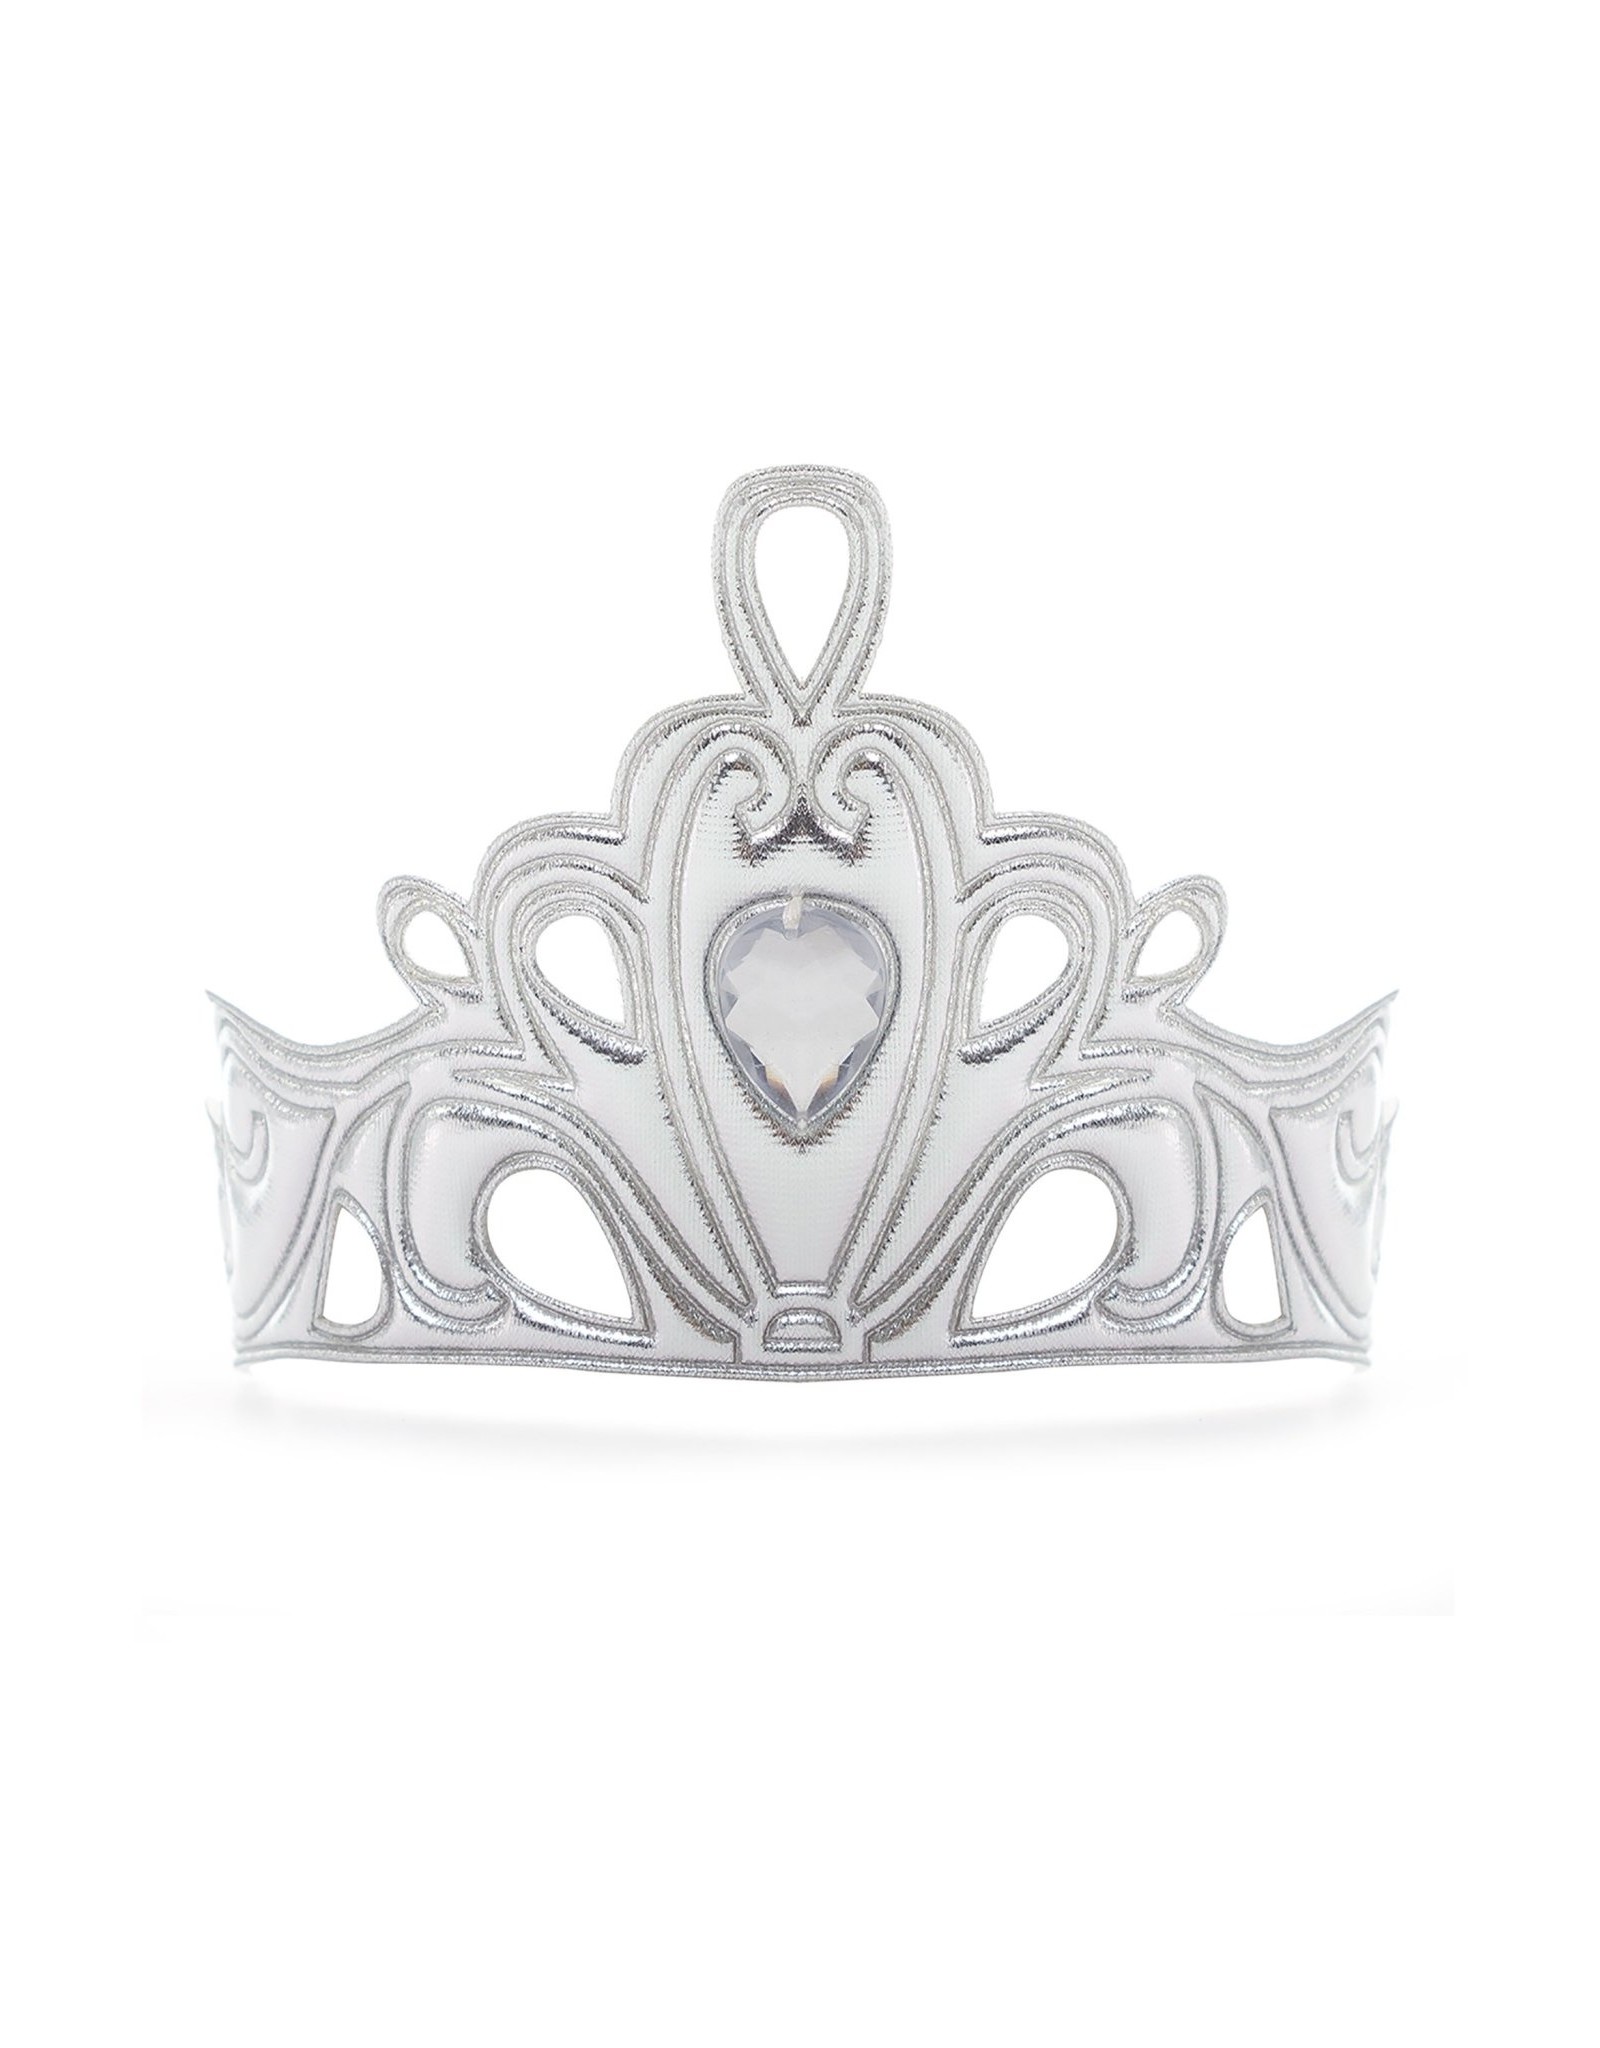 Diva Crown Silver